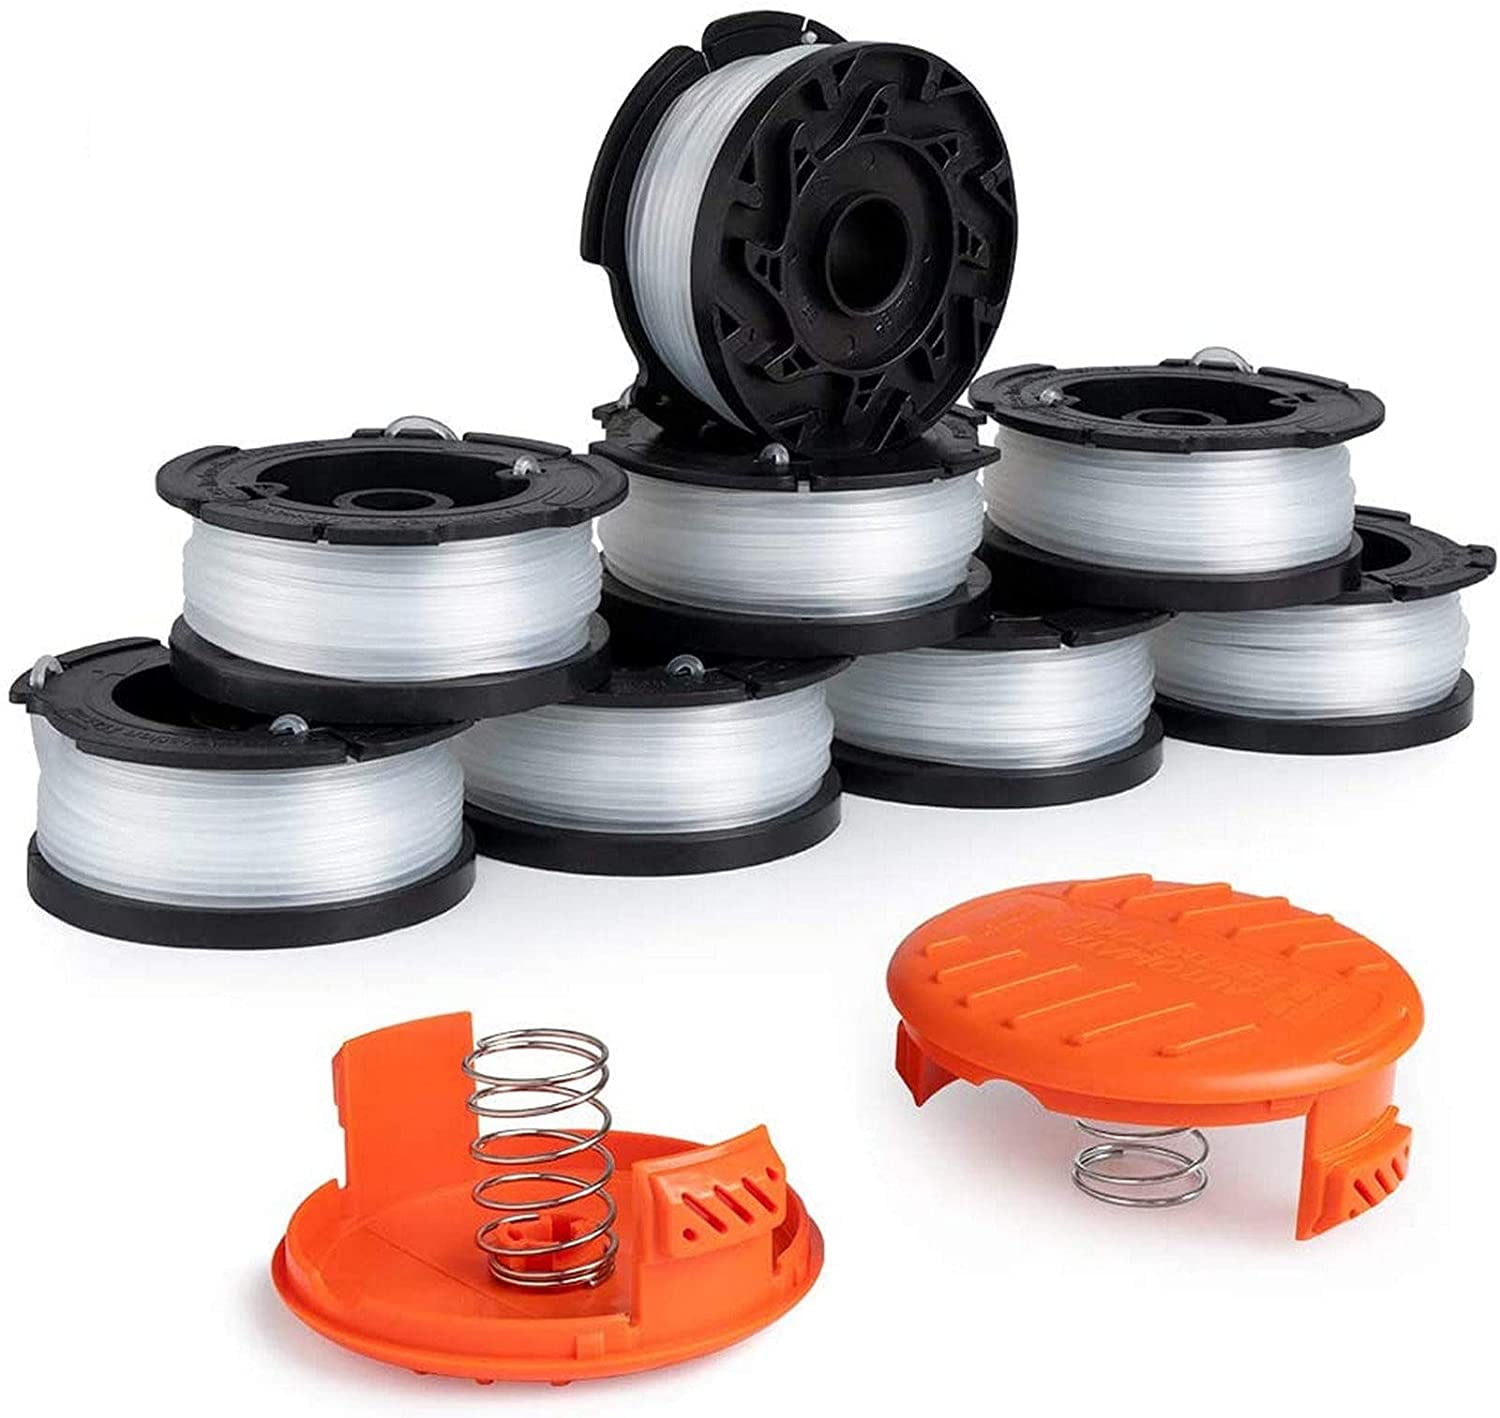 MOLIK Trimmer Spool for Black+Decker, Autofeed Replacement Spools for AF-100  String Trimmer Edger, 240ft 0.065 Trimmer Line Replacement Spool(6 Replacement  Spool,1 Spool Cap(Orange),1 Spring)